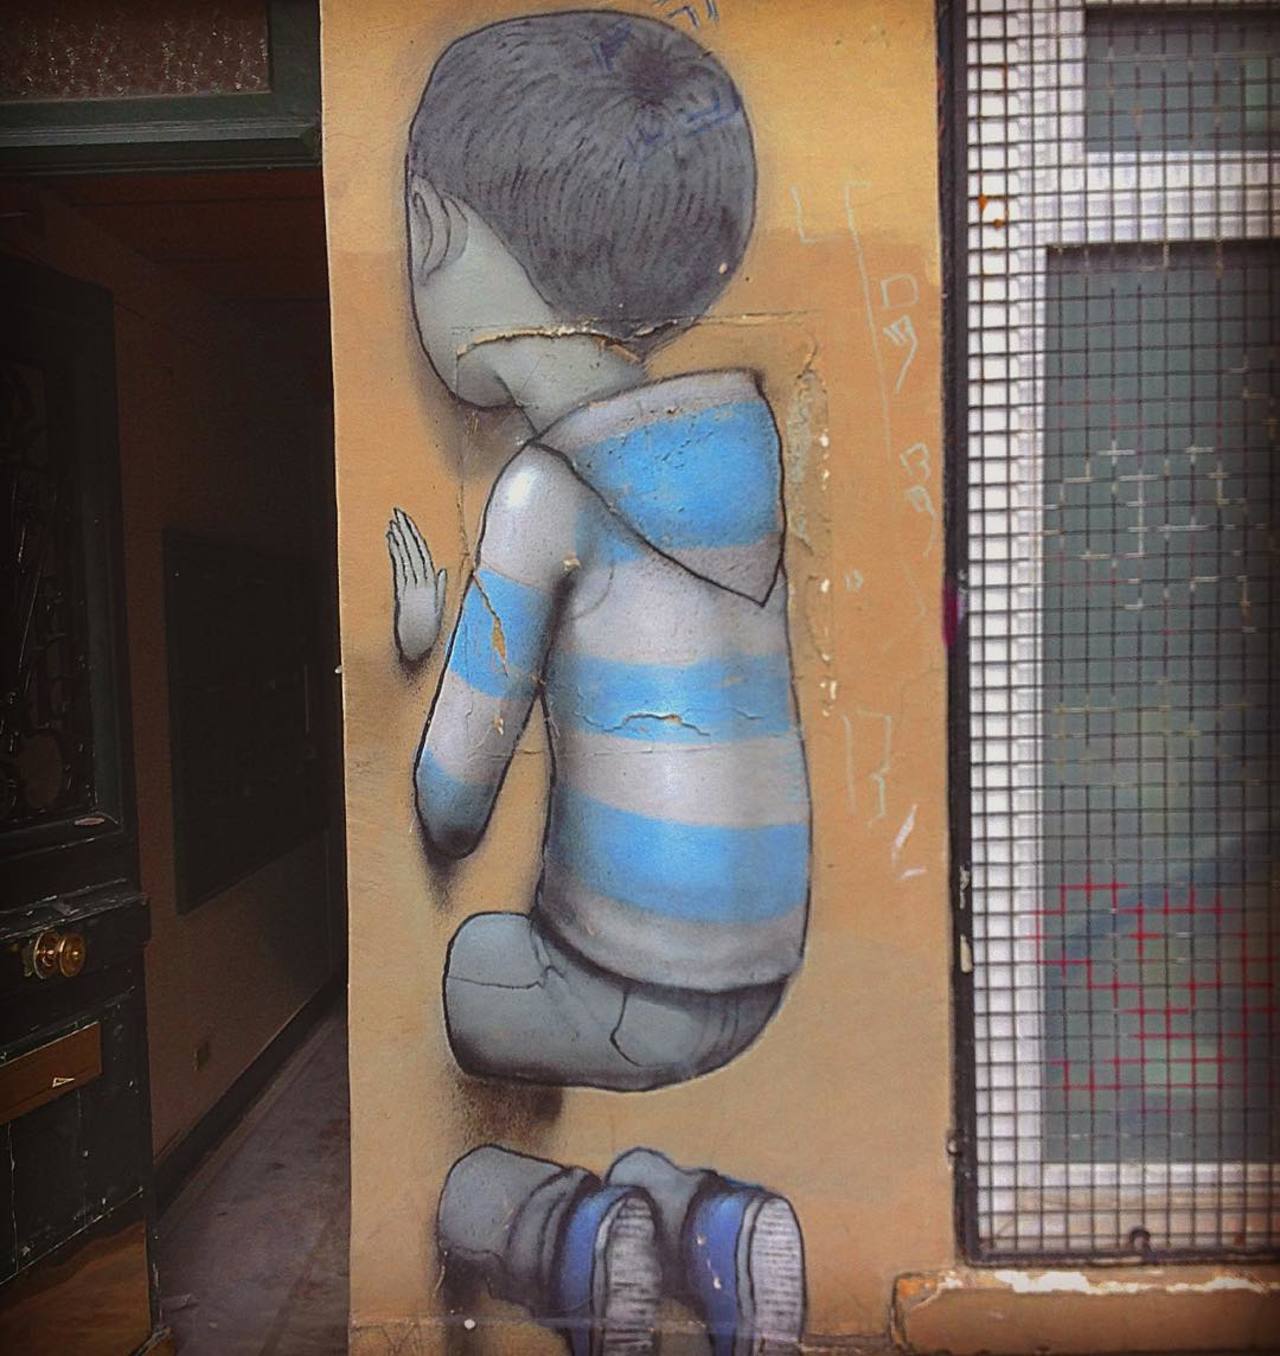 #Paris #graffiti photo by @stefetlinda http://ift.tt/1i1mg9u #StreetArt https://t.co/ndkbxbPOoX